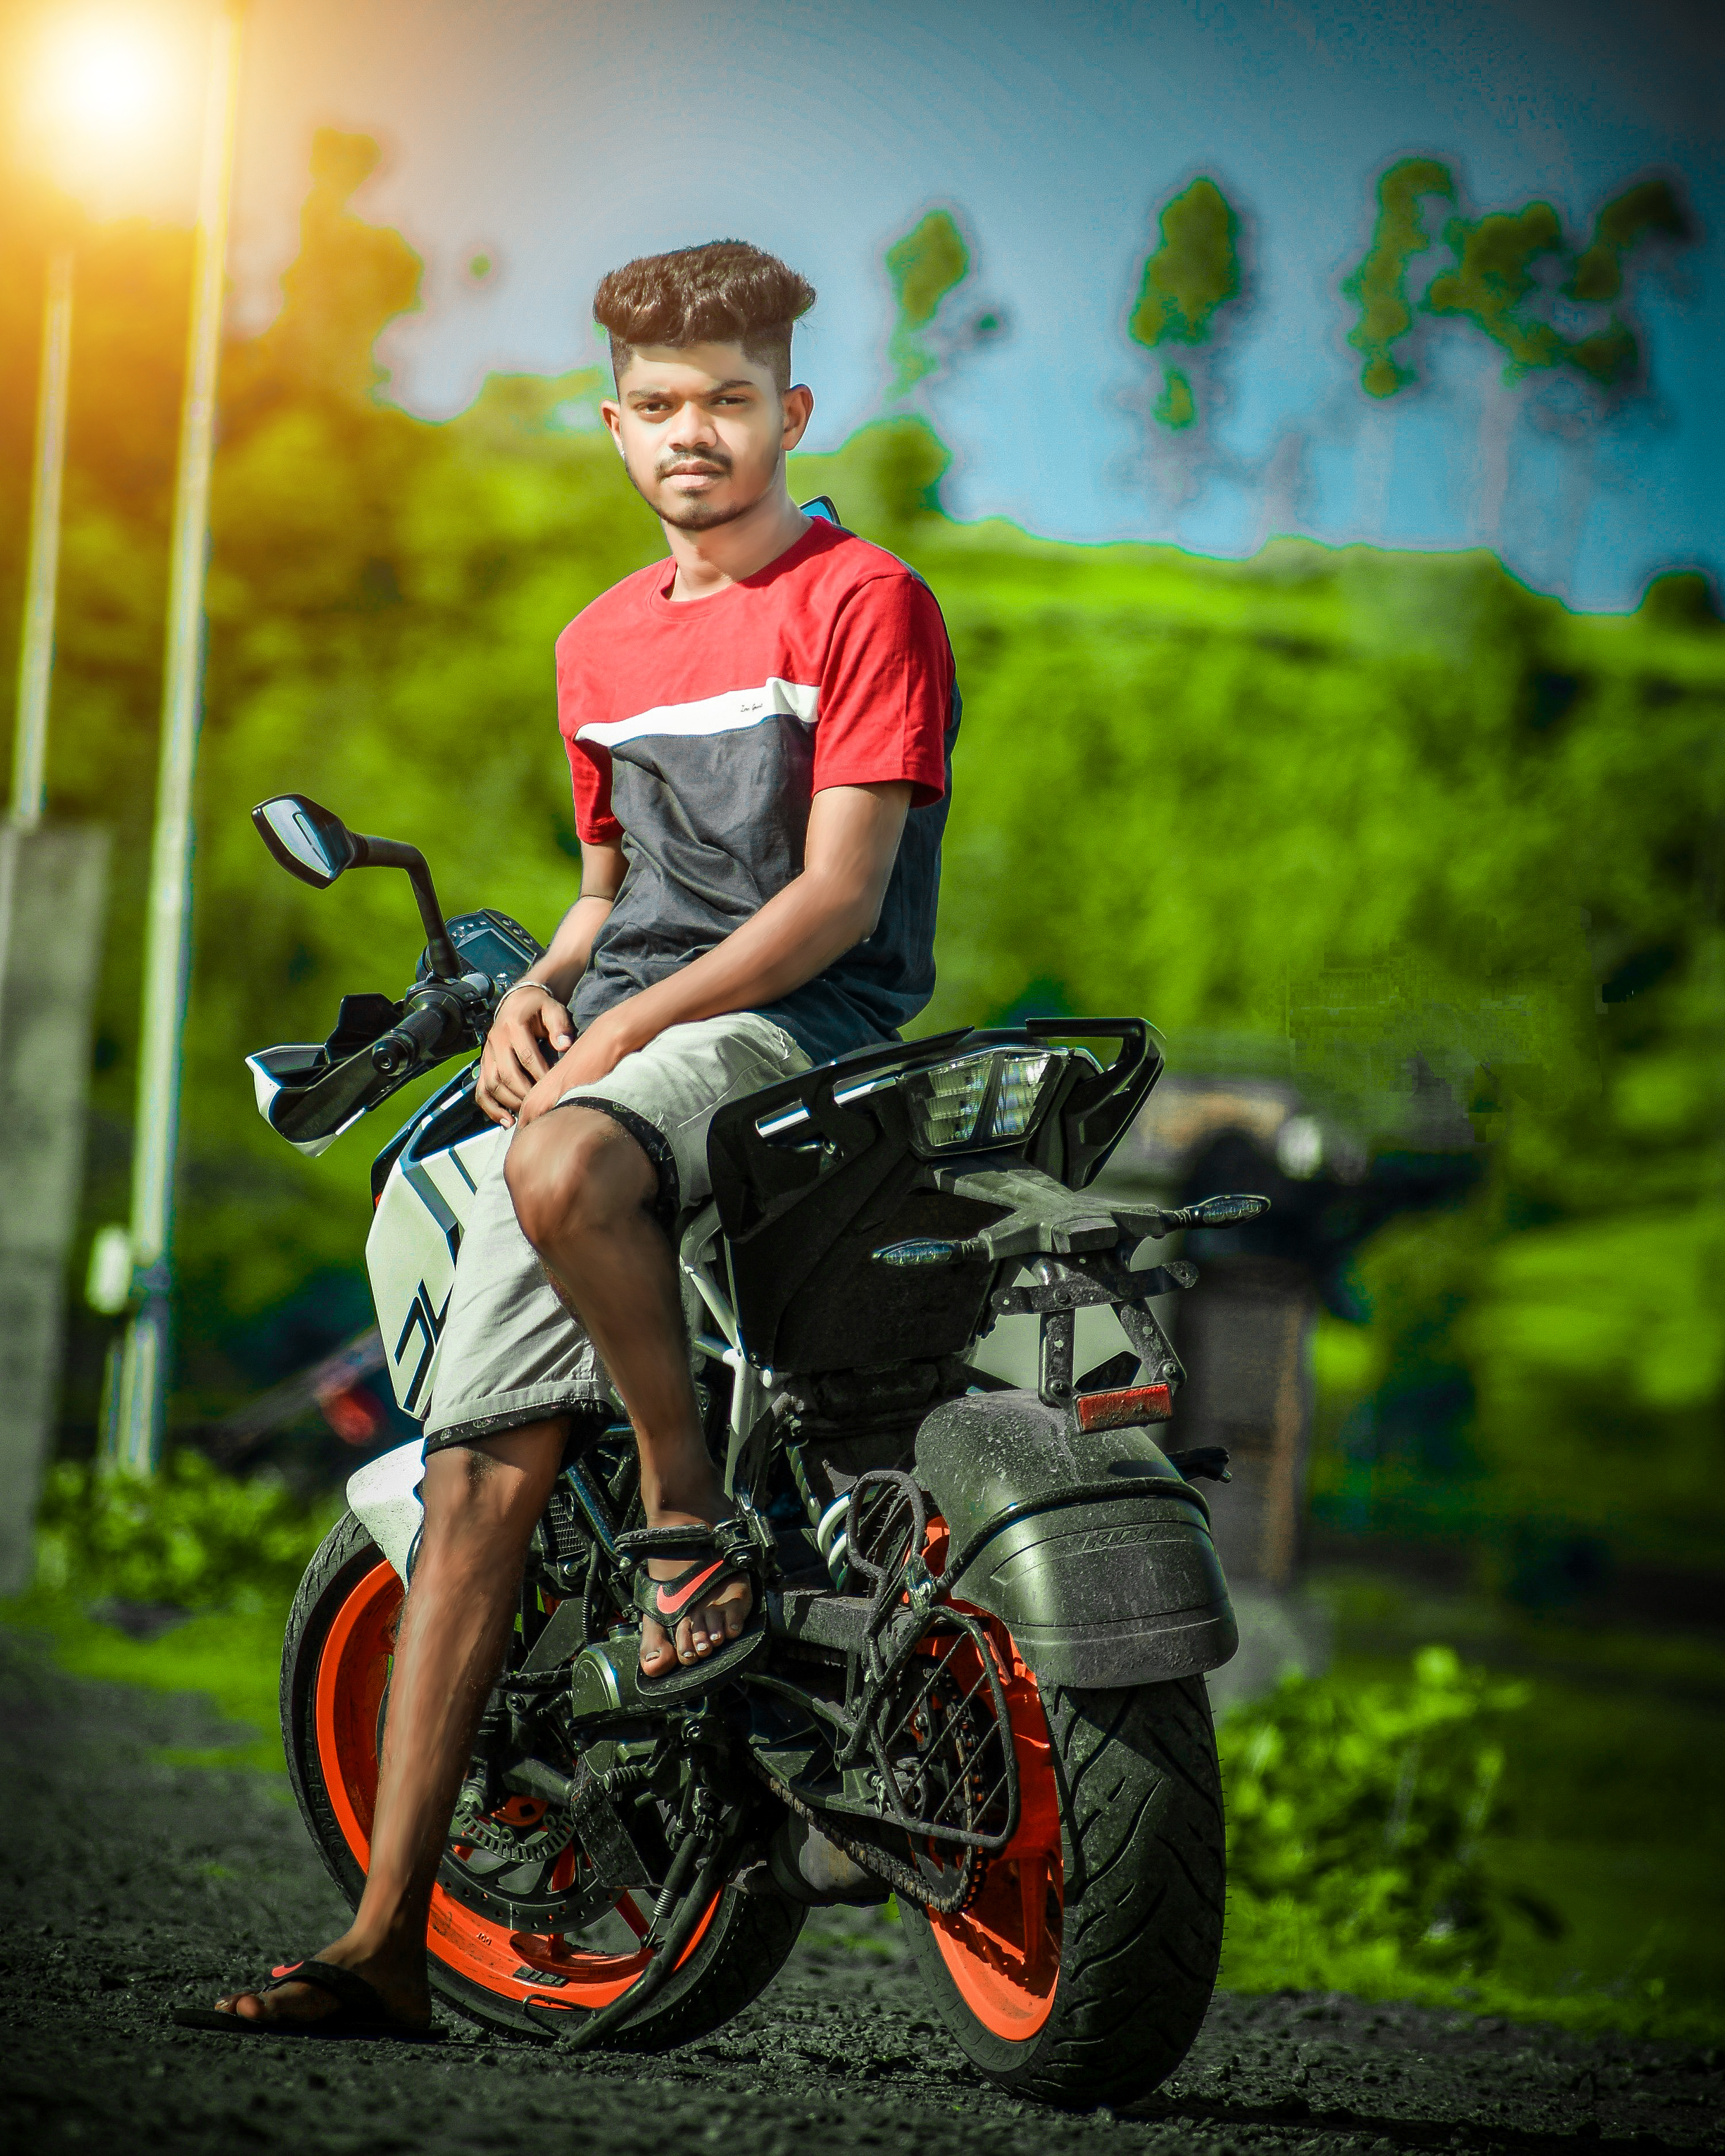 A boy on a motorcycle